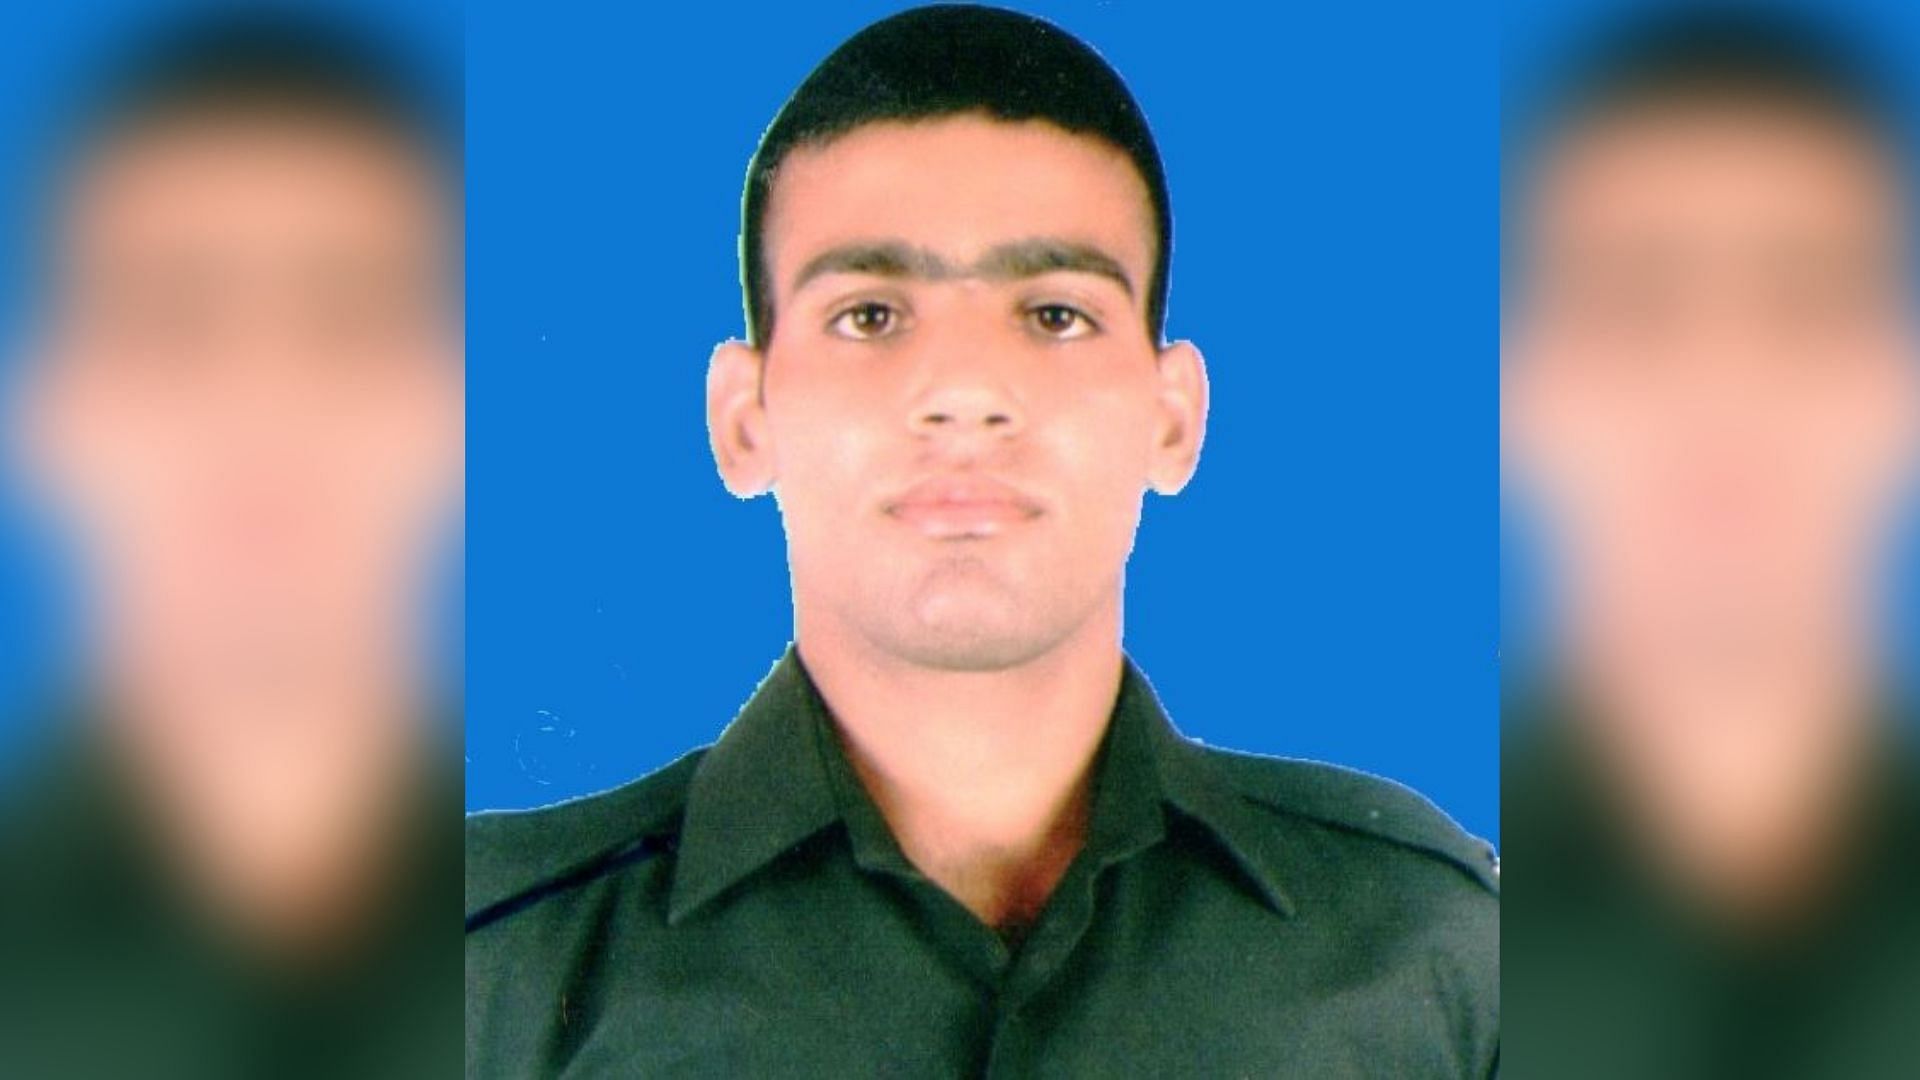 Sepoy Rambir of 34 Rashtriya Rifles of the Indian Army was killed in the encounter.